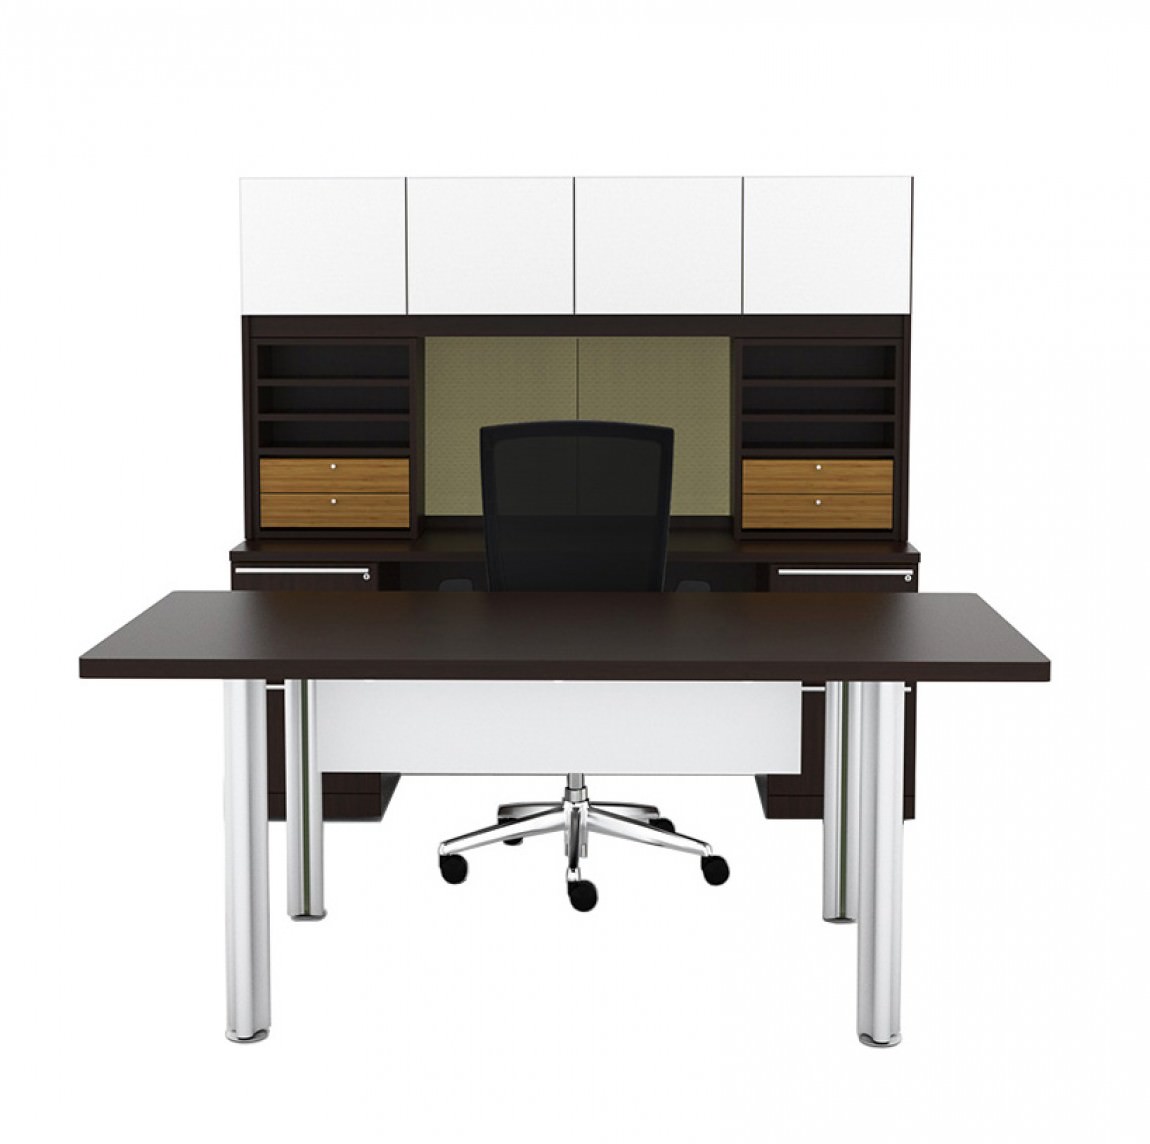 https://madisonliquidators.com/images/p/1150/9081-rectangular-desk-with-credenza-desk-and-hutch-1.jpg